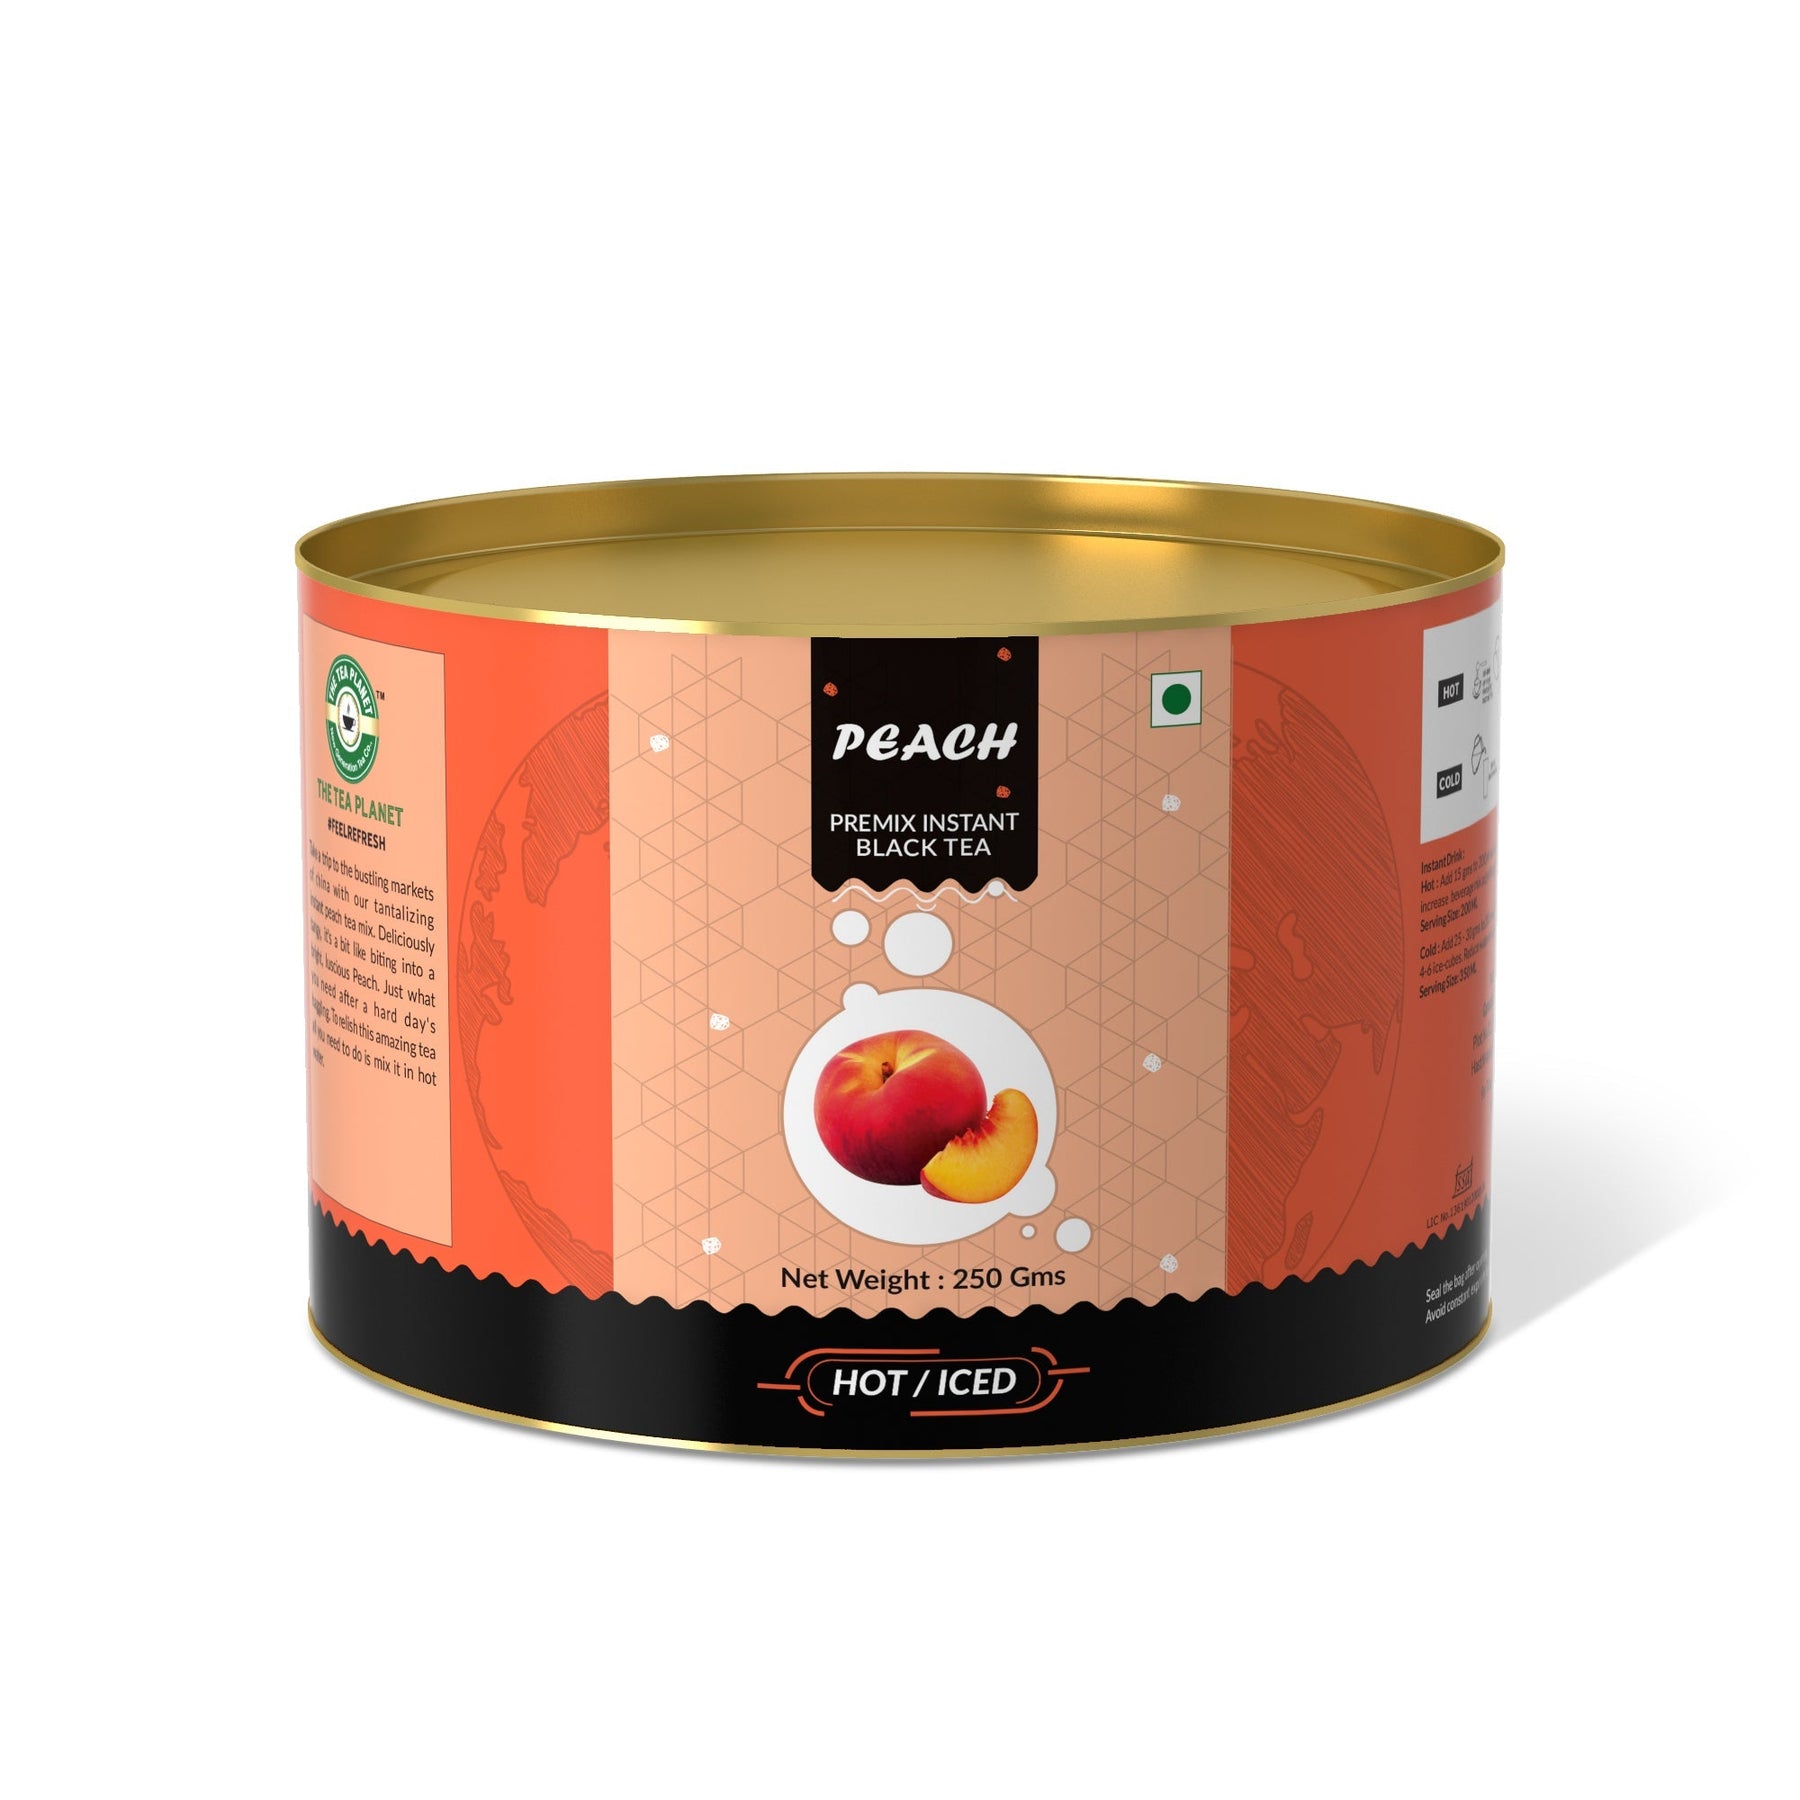 Peach Flavored Instant Black Tea - 800 gms